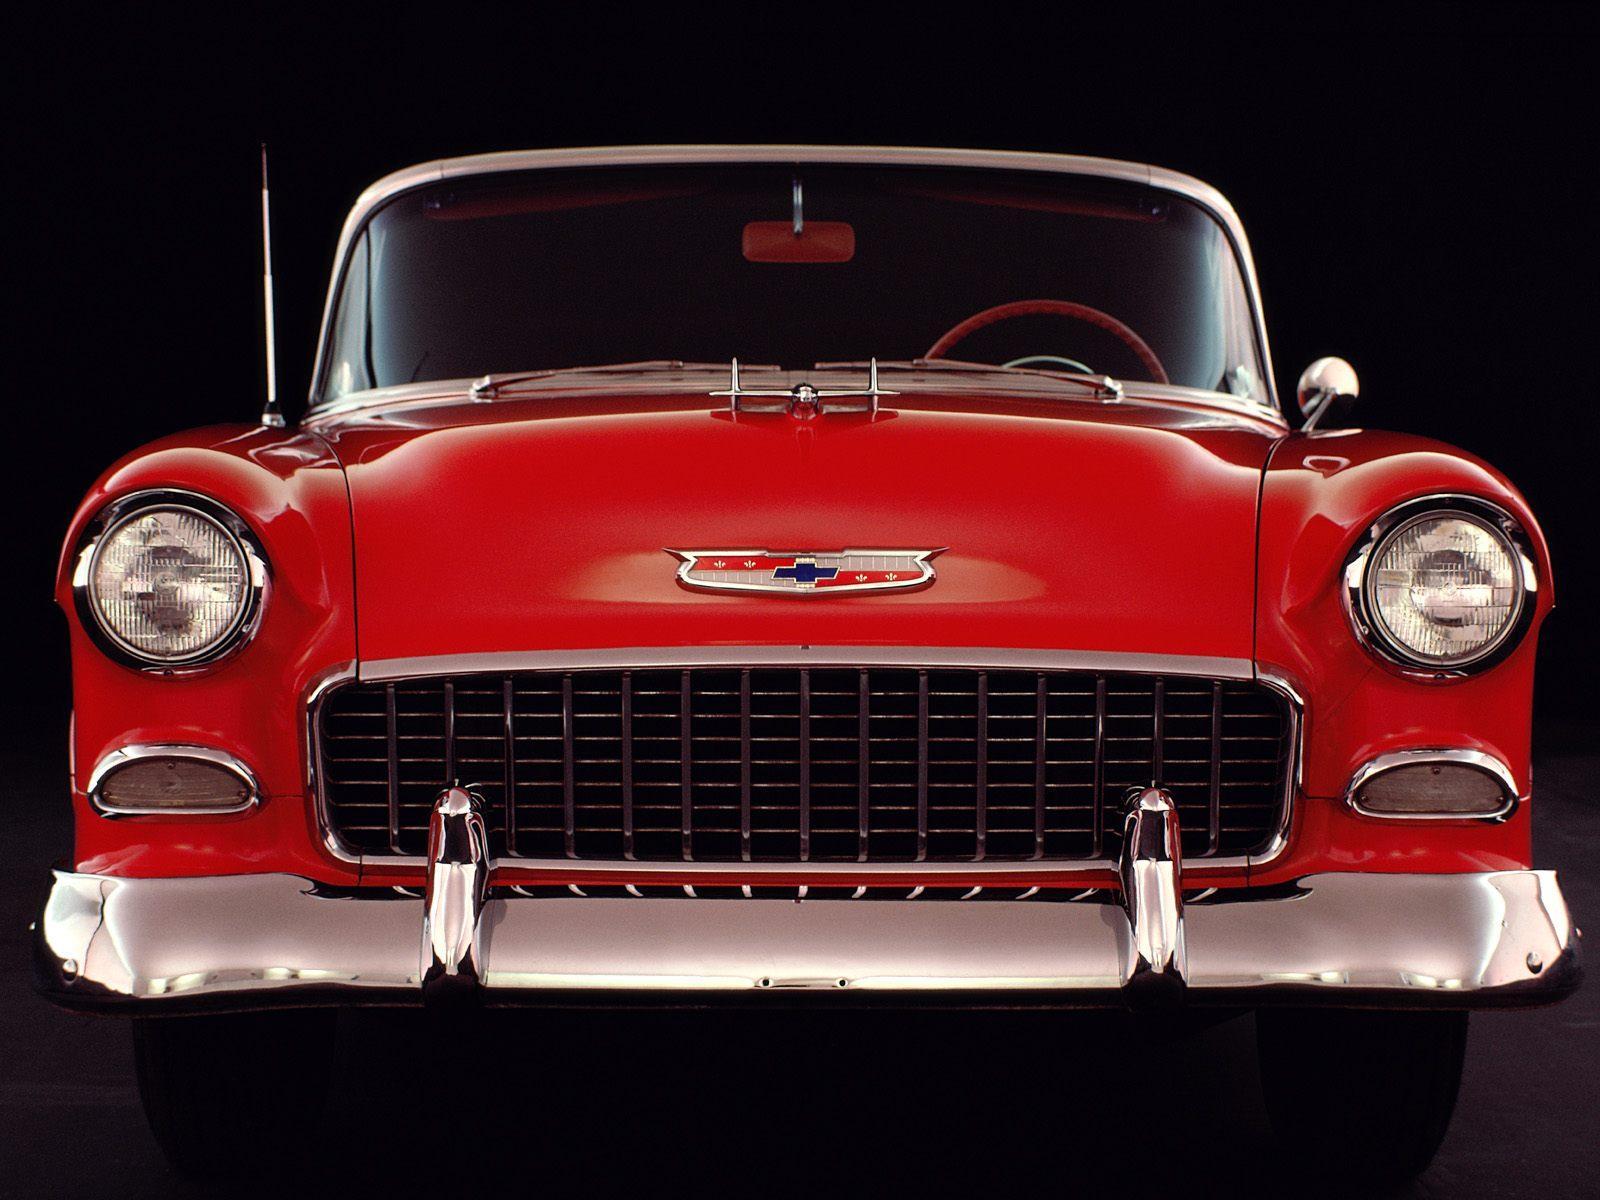 An American classic car 1955 Chevrolet free desktop background